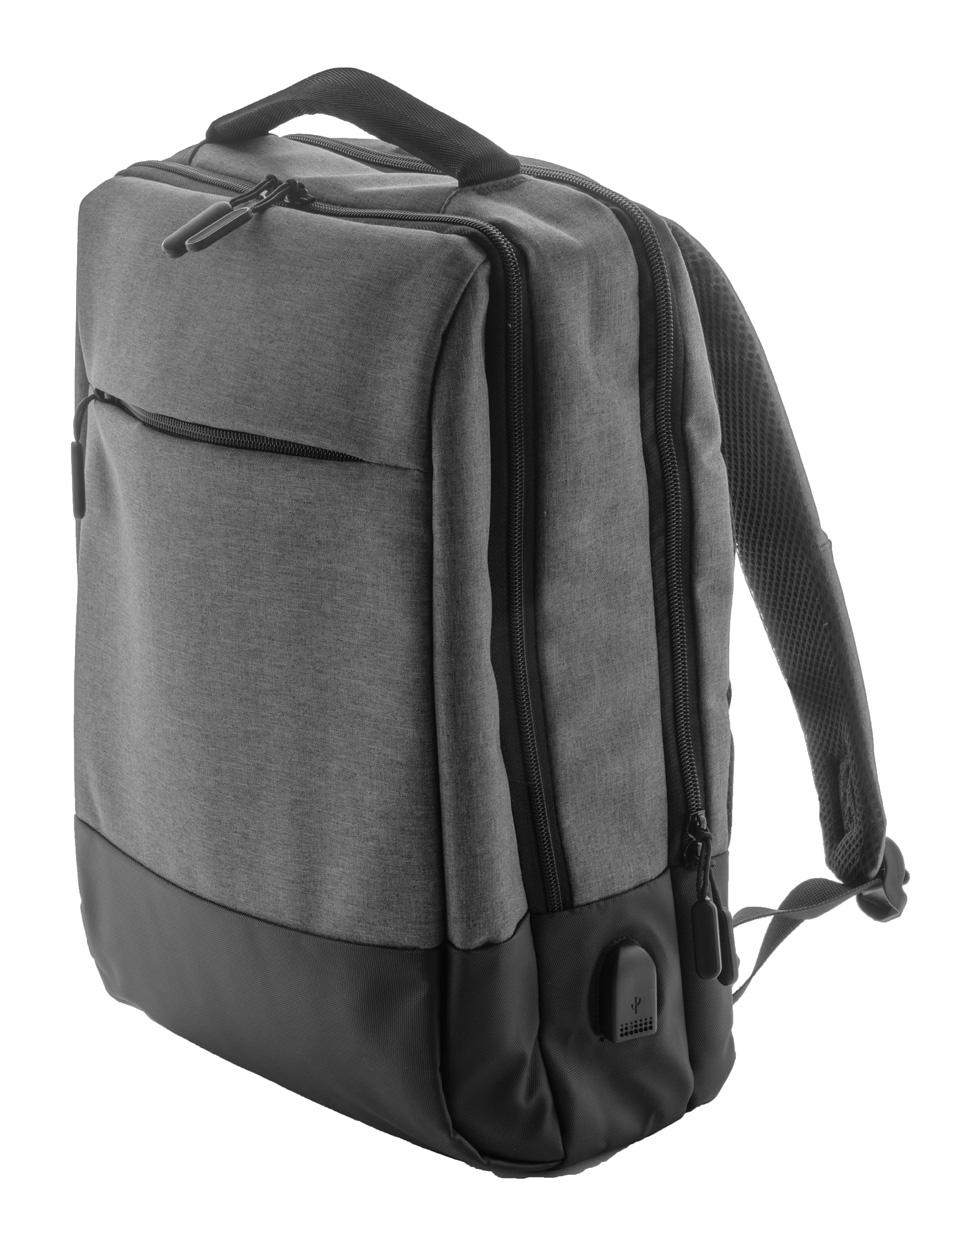 Promo  Bezos backpack